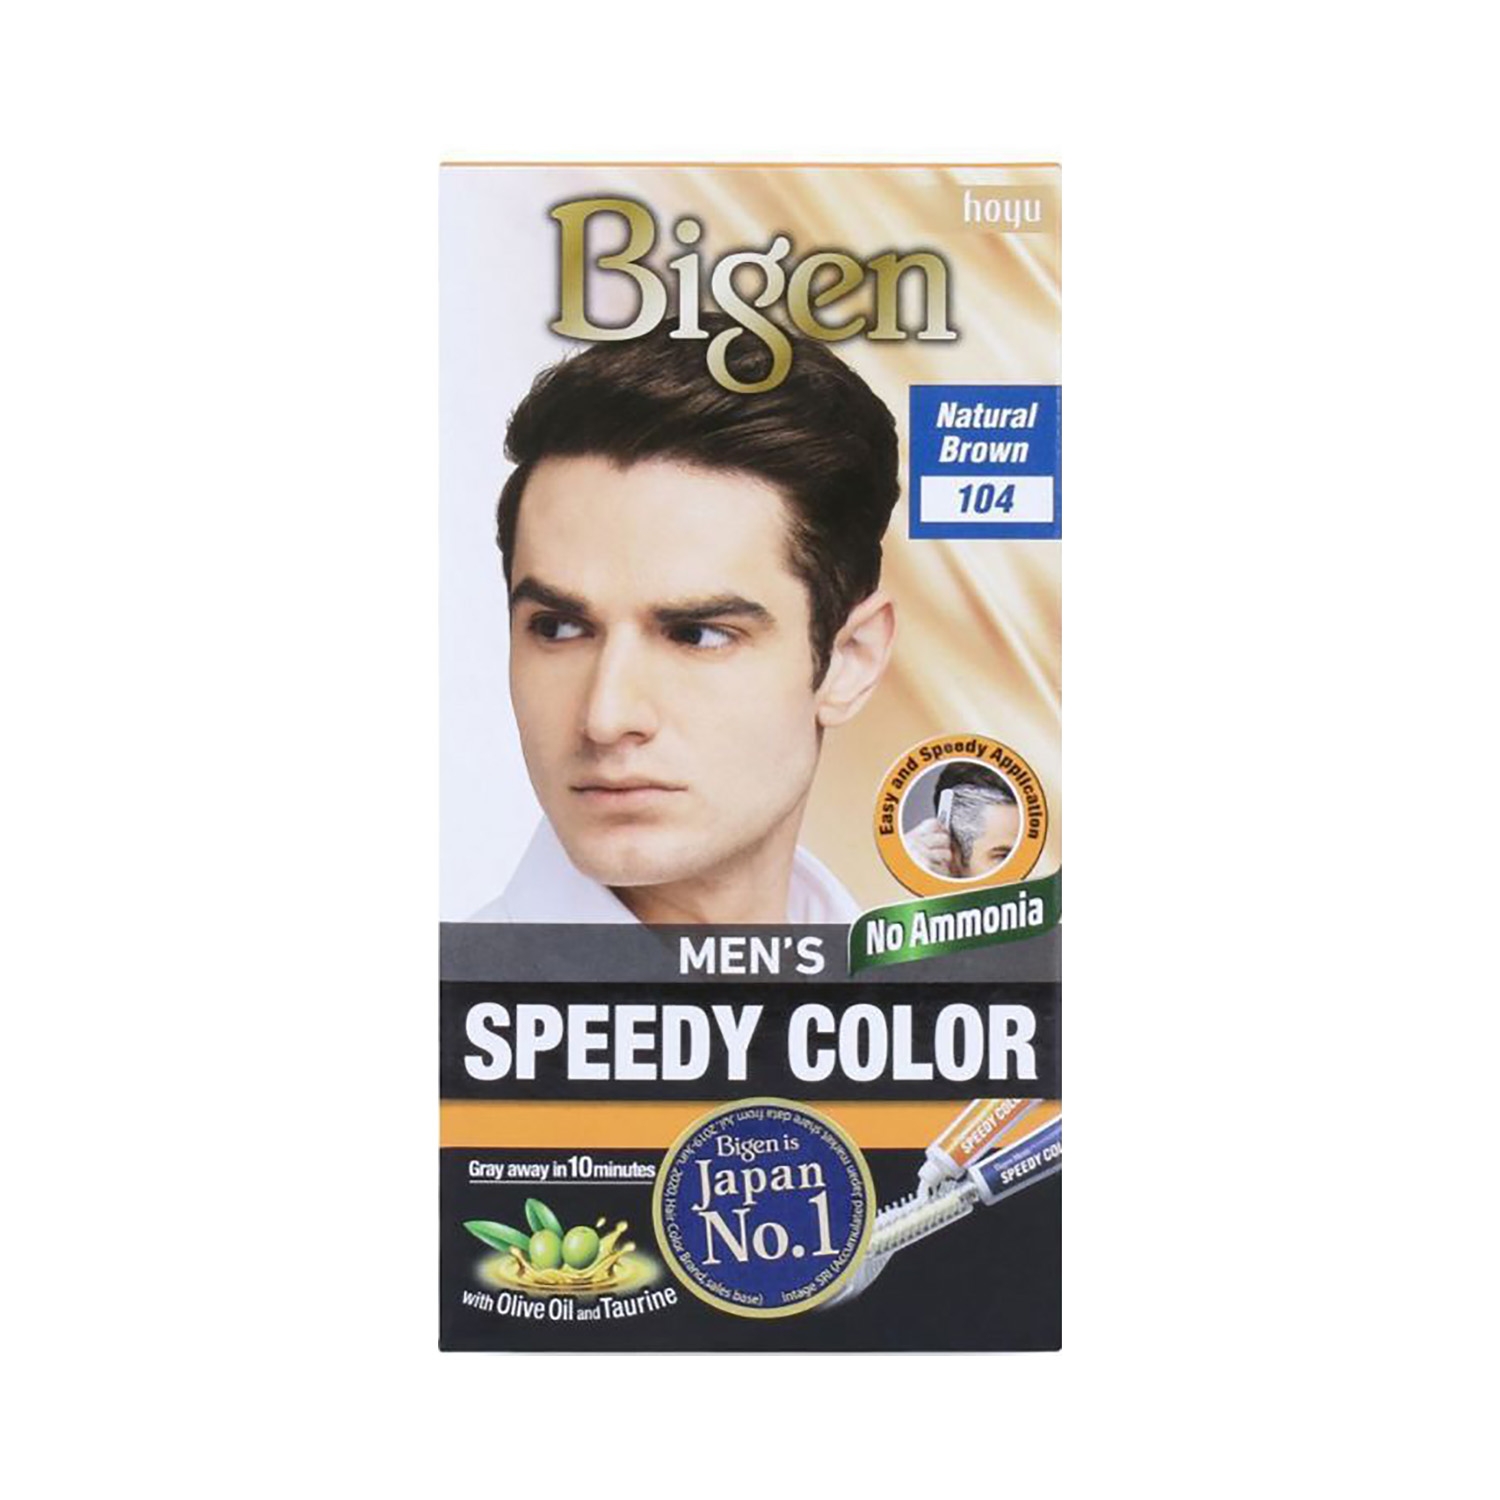 Bigen | Bigen Men's Speedy Hair Color - 104 Natural Brown (80g)